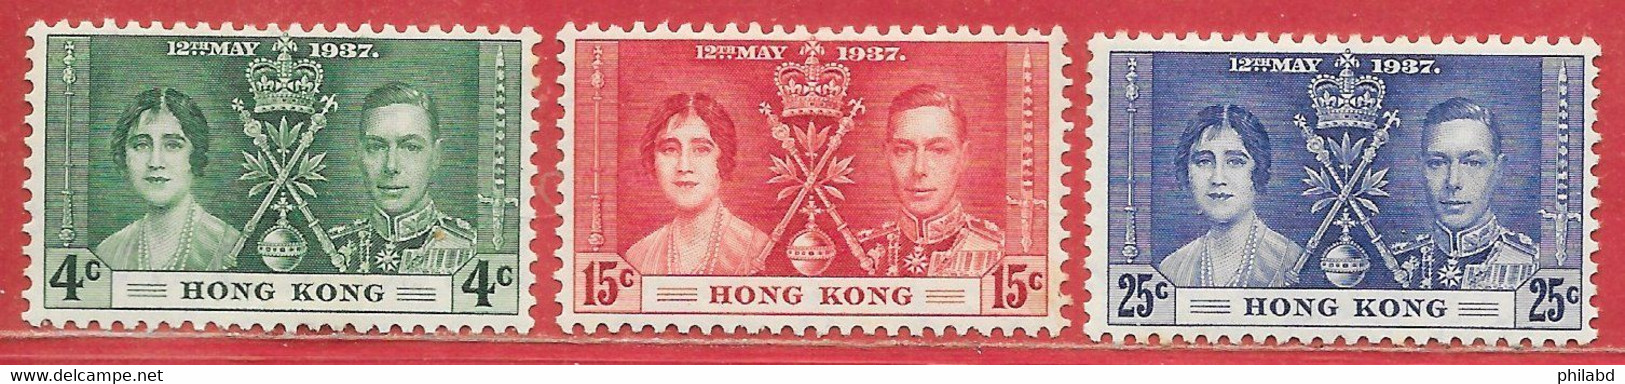 Hong Kong N°137 à/to 139 1937 * - Ungebraucht